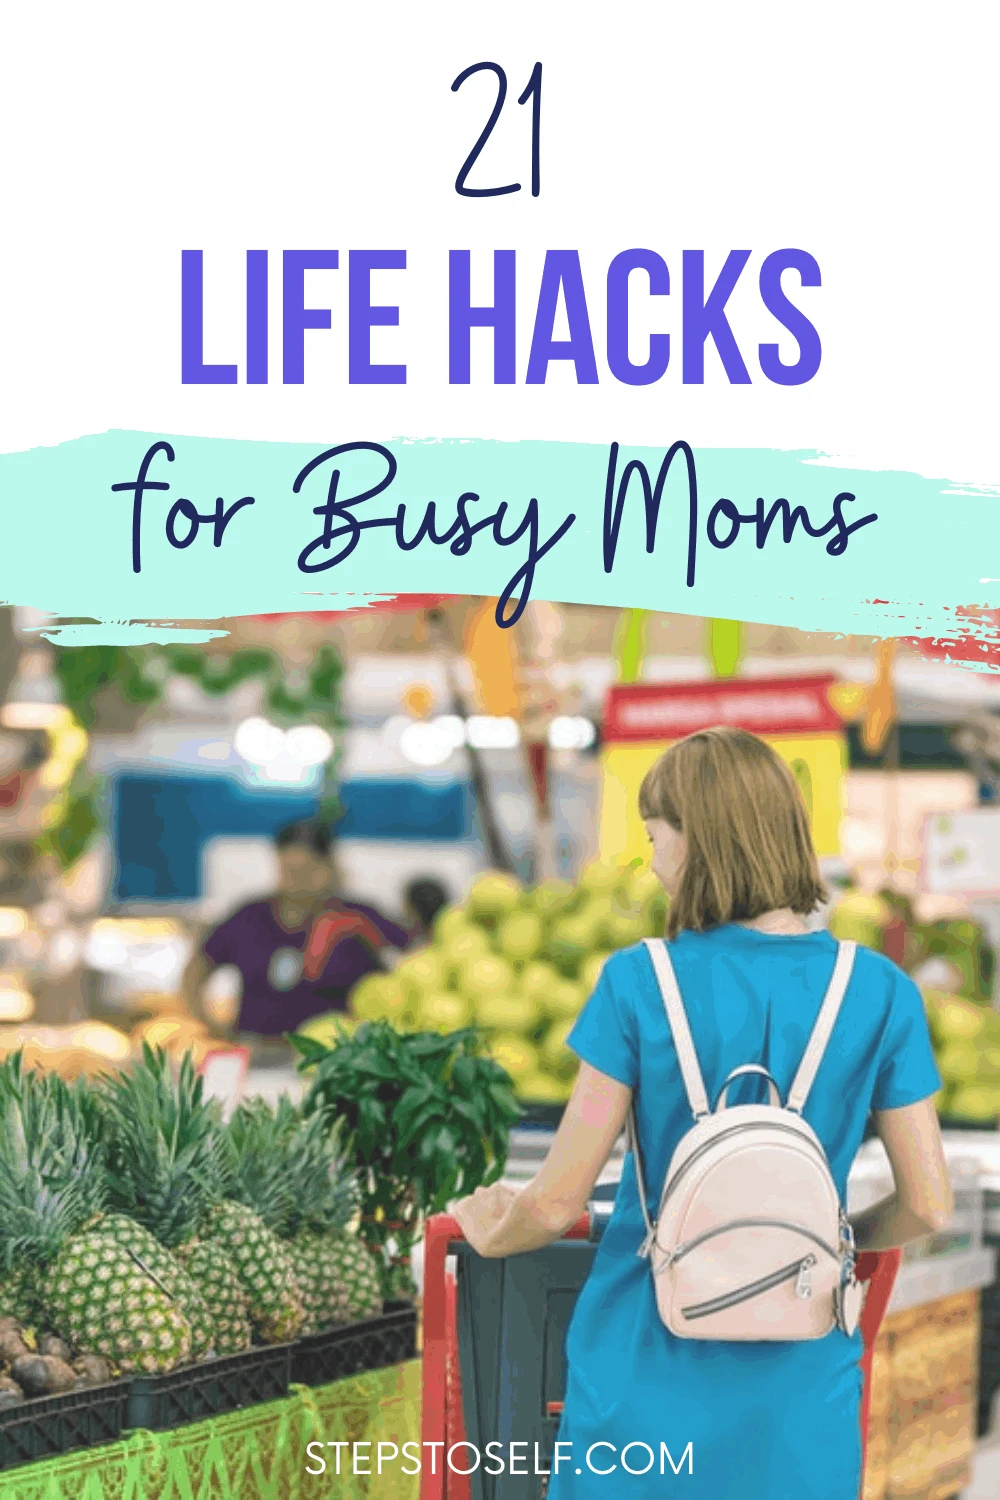 Life hacks for busy mom pin image